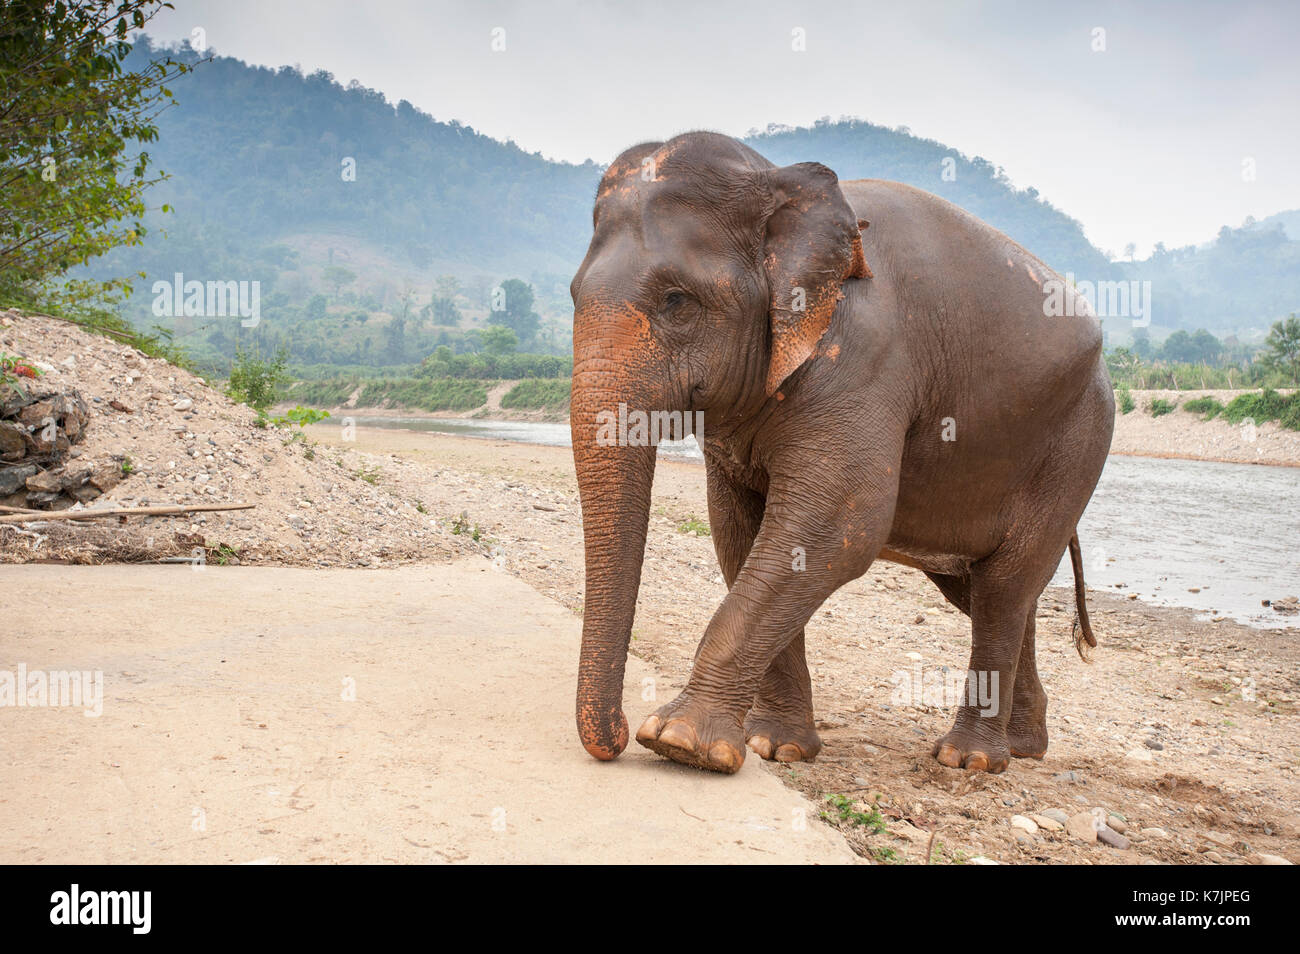 Asiatischer Elefant am Fluss Mae Taeng in einem Elefanten-Rettungs- und Rehabilitationszentrum. Elephant Nature Park, Chiang Mai Provinz, Thailand Stockfoto